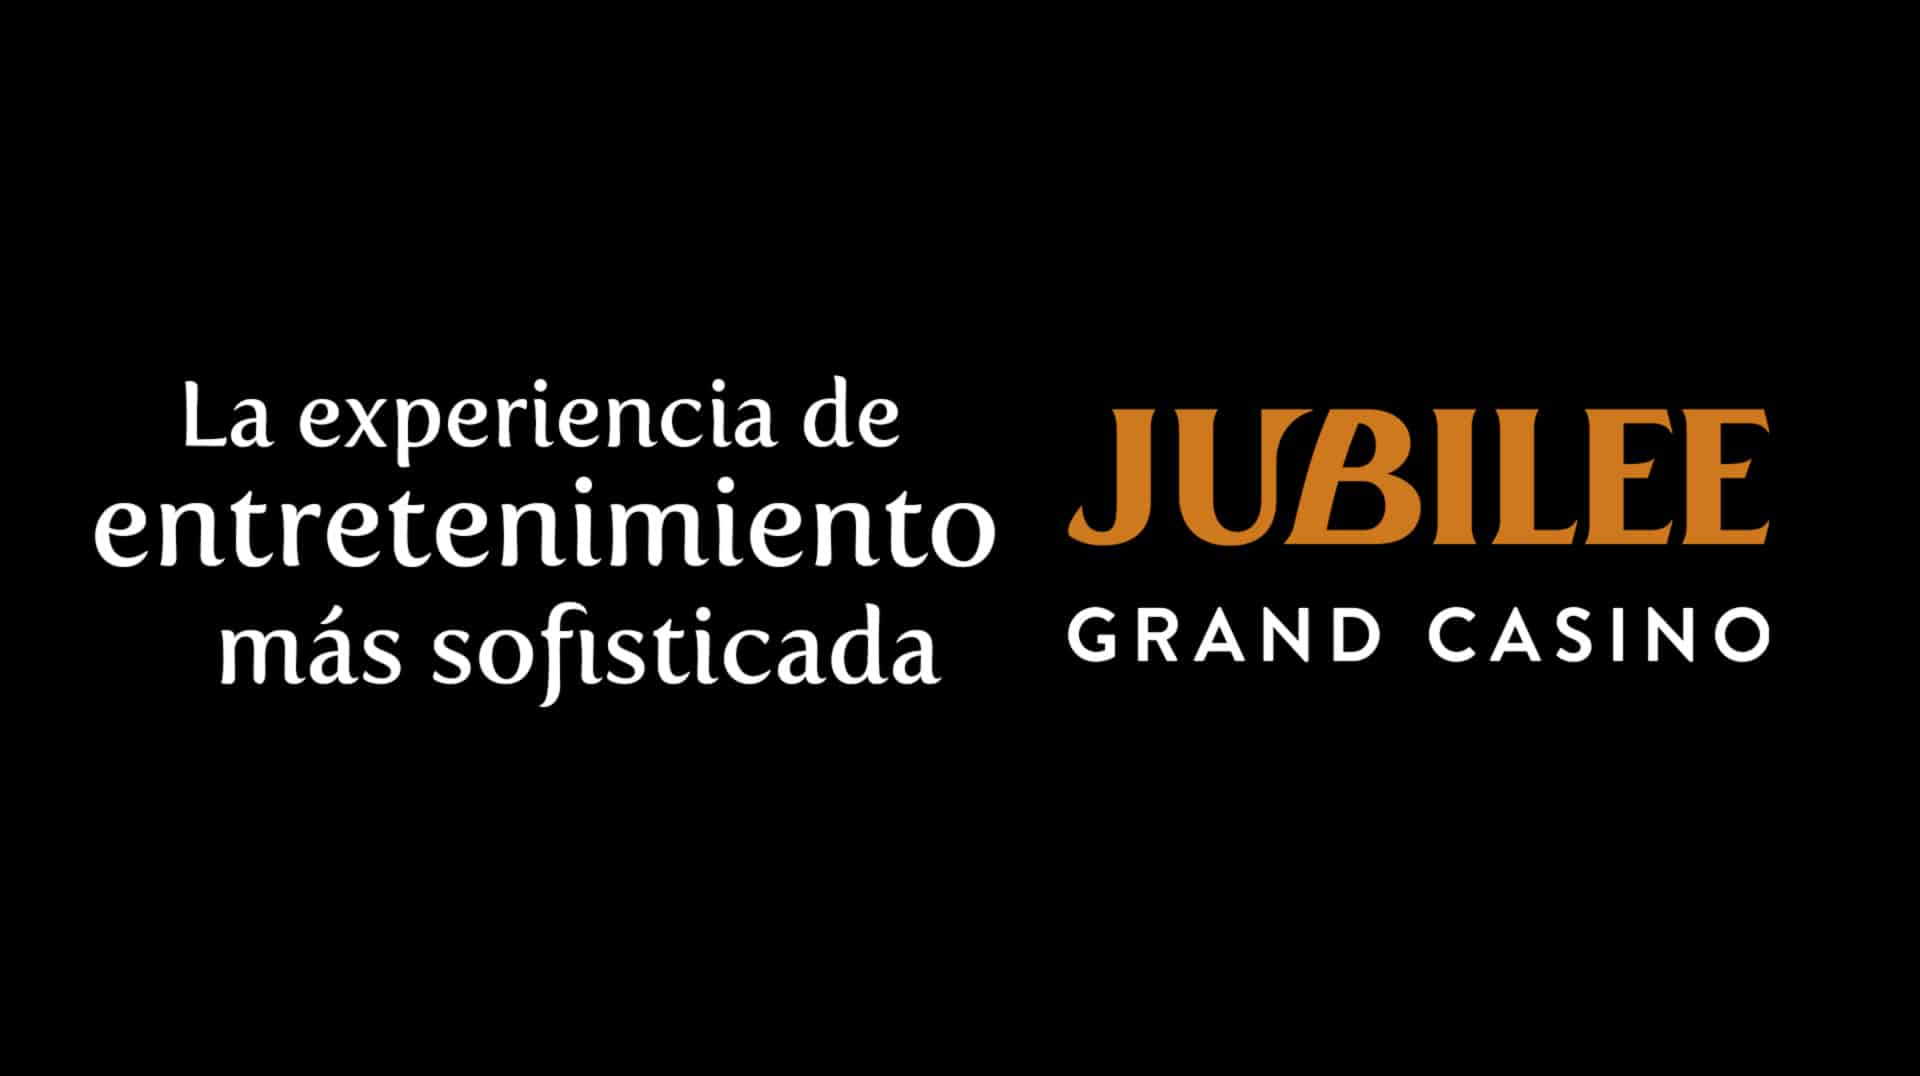 Jubilee Grand Casino